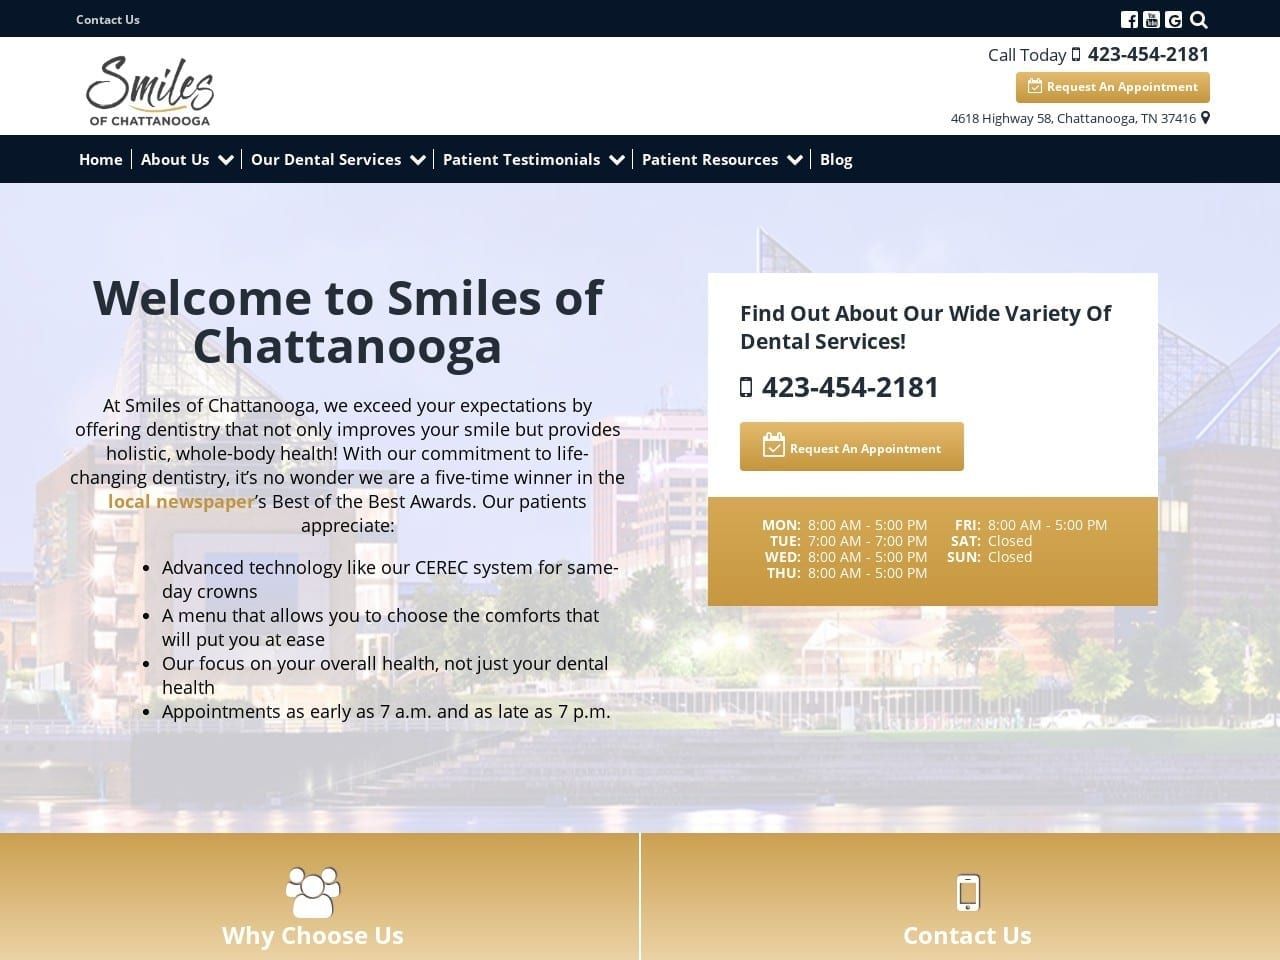 Smiles of Chattanooga Website Screenshot from smilechattanooga.com